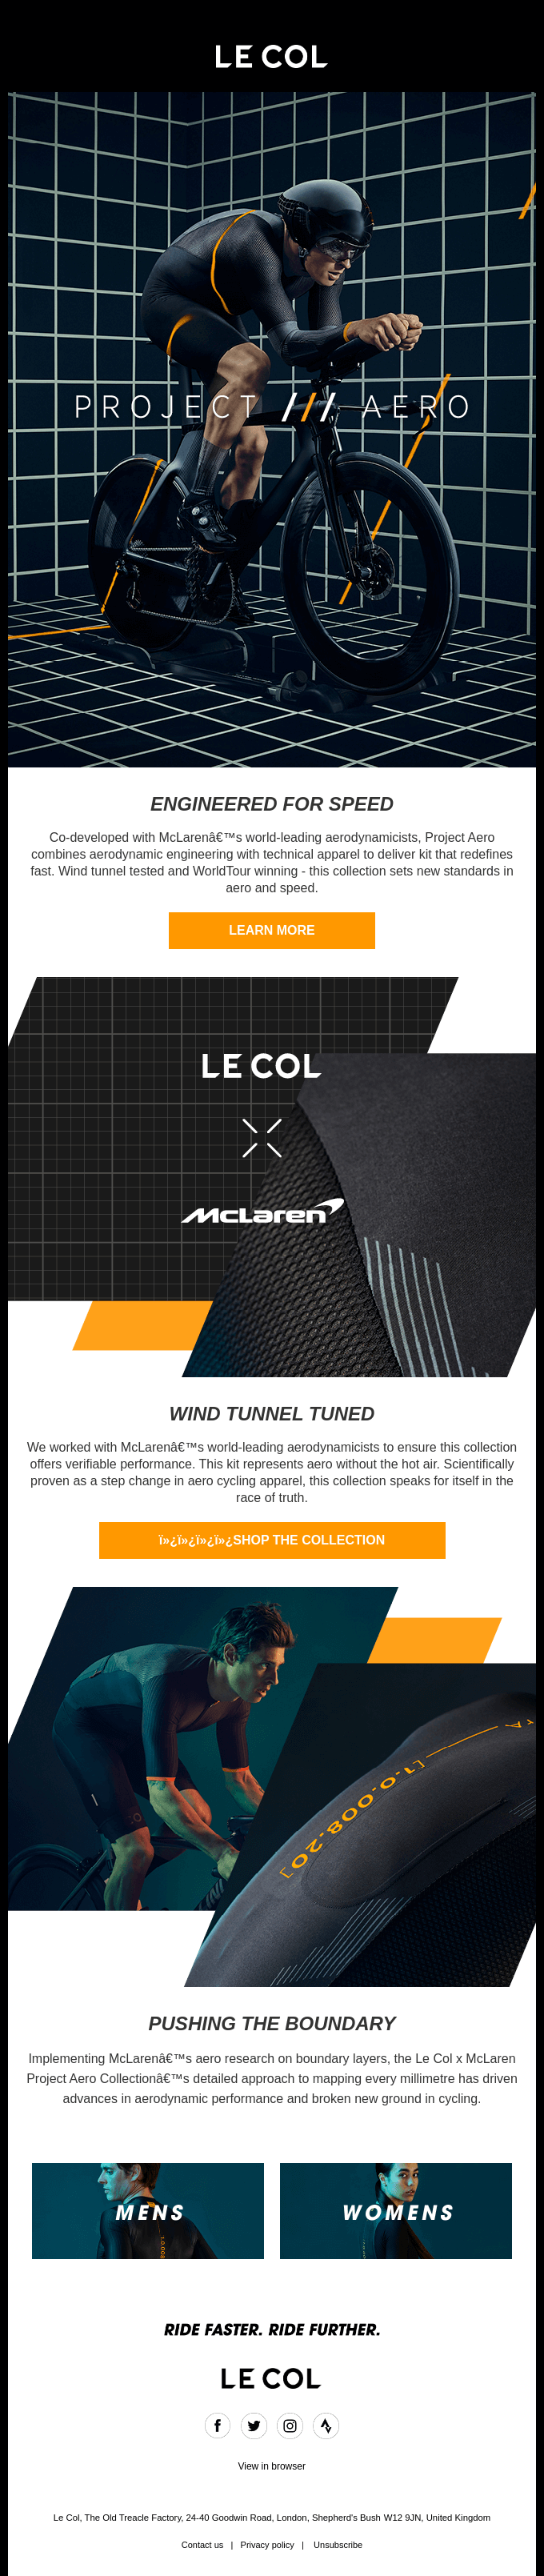 Introducing Le Col x McLaren Project Aero